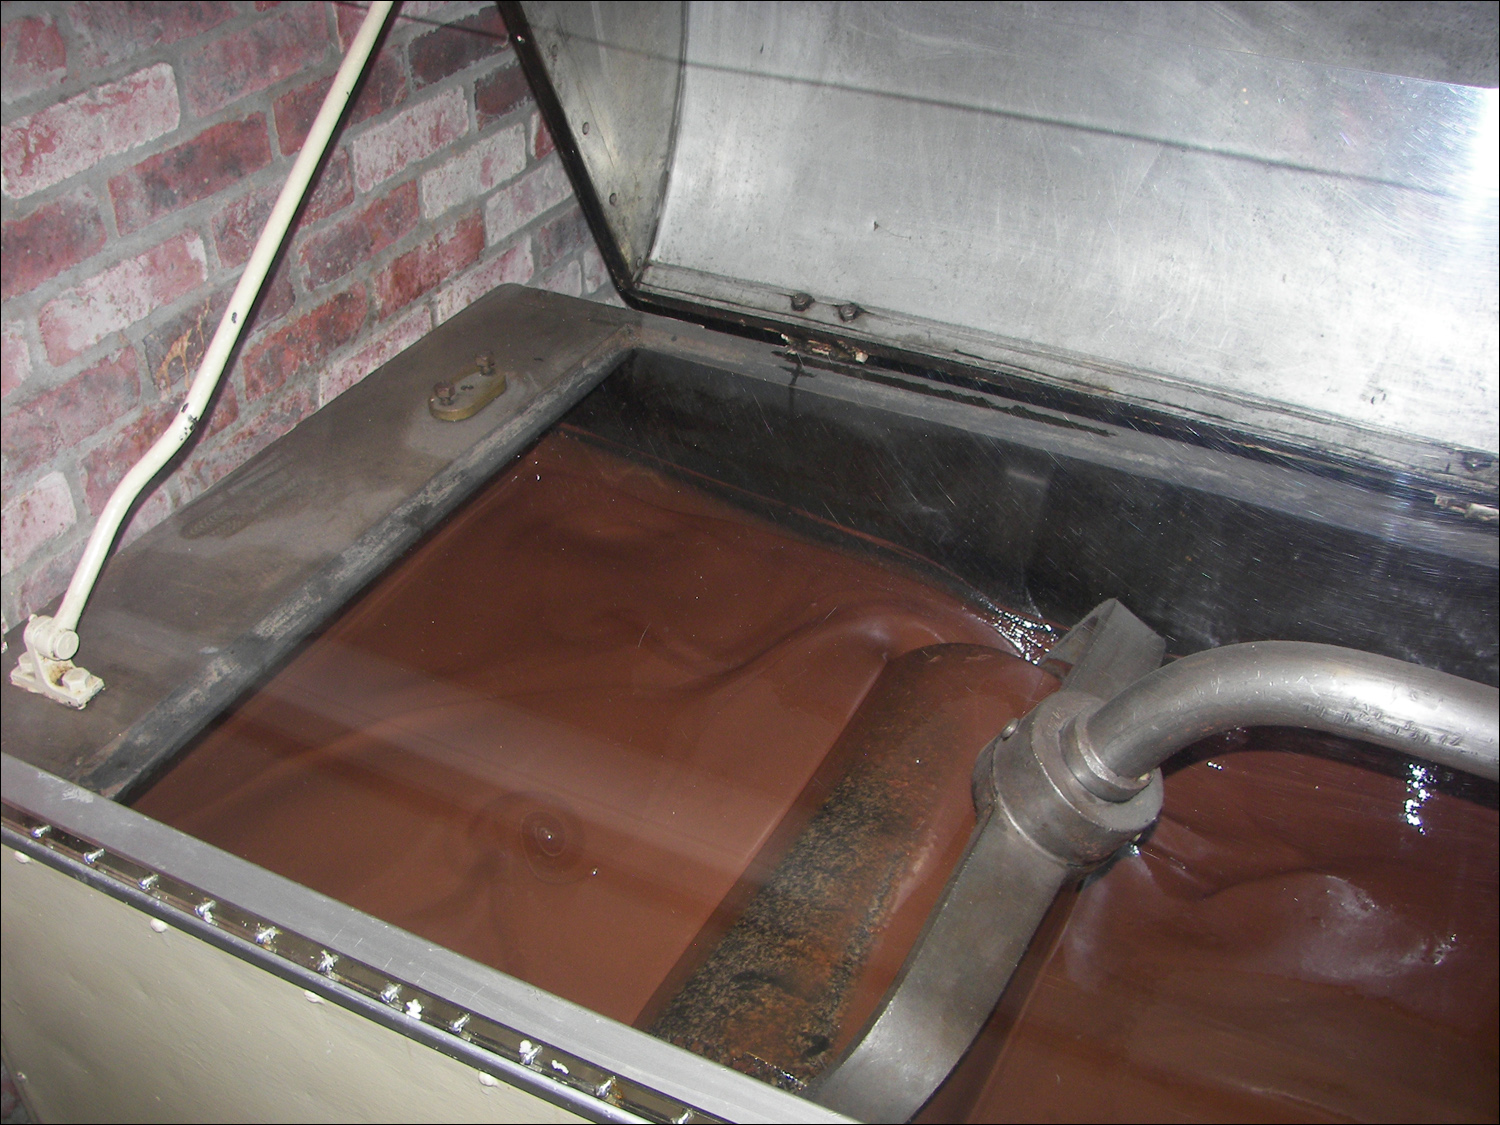 Chocolate making process at Gherardelli